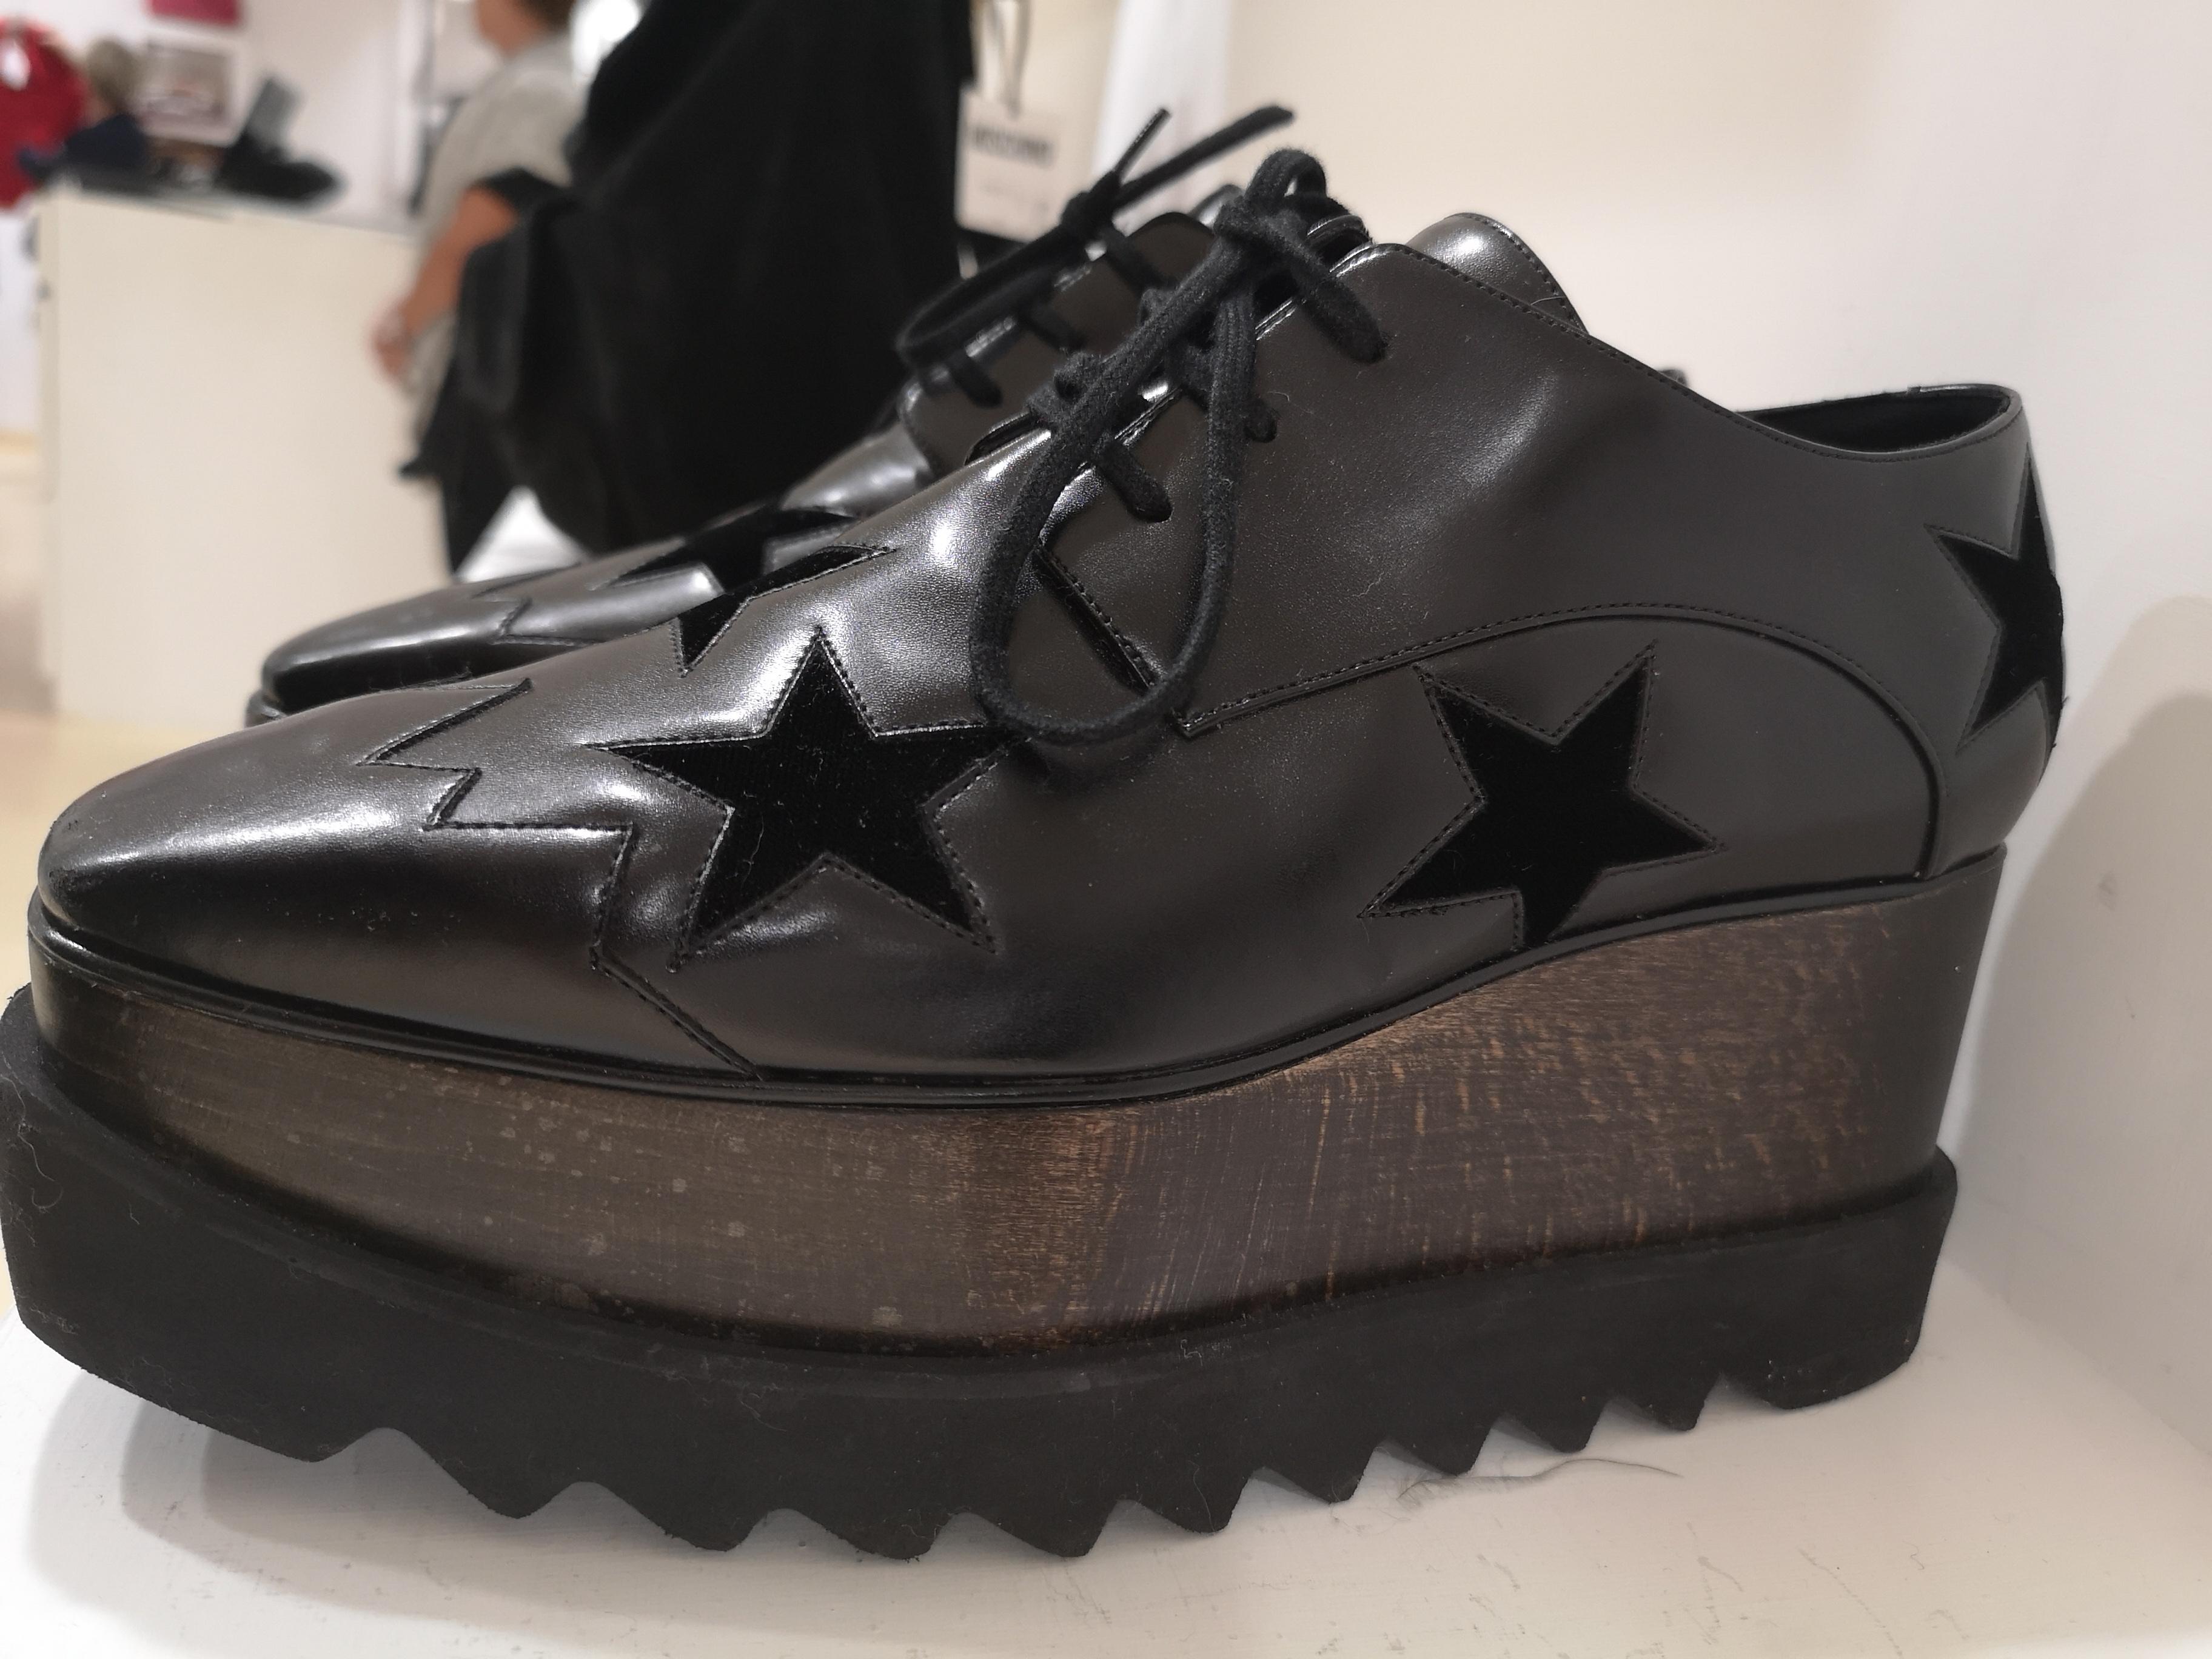 Stella McCartney black shoes
size 39